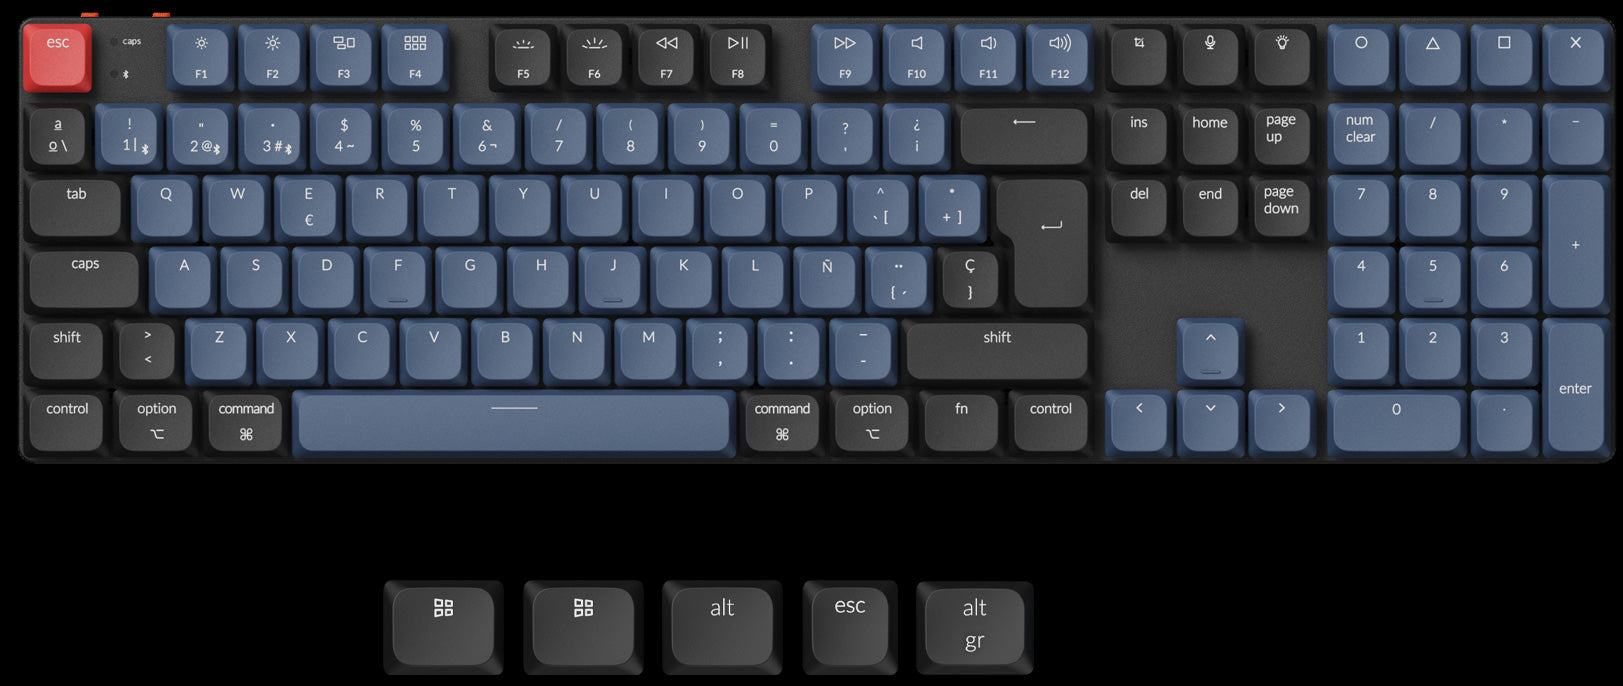 KeycKeychron K5 Pro QMK/VIA Low-Profile ultra-slim Wireless Mechanical Keyboard ISO Layout